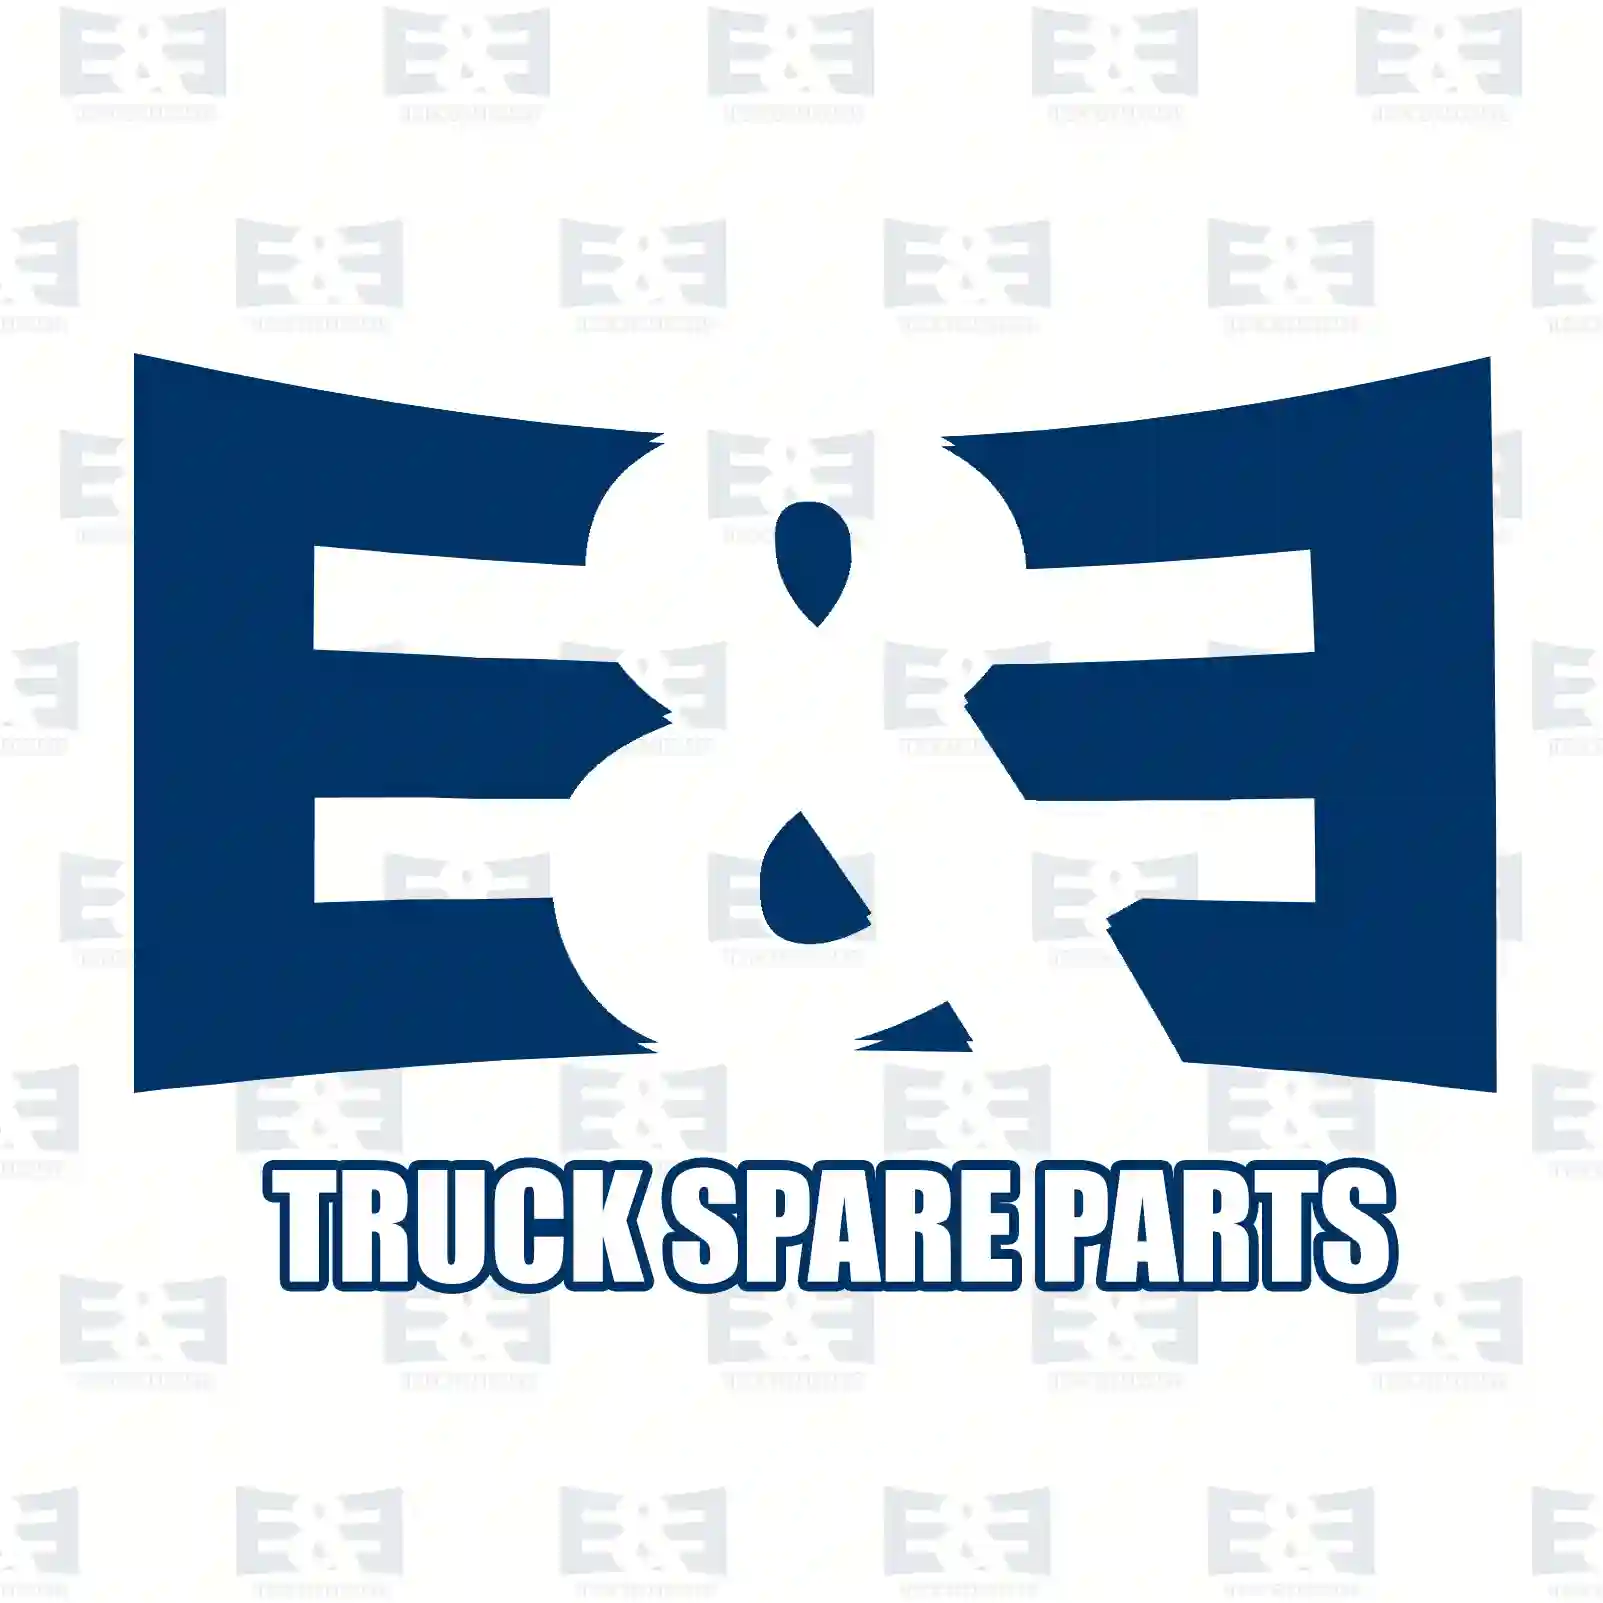 Hub Oil seal, EE No 2E2284815 ,  oem no:1121458, , E&E Truck Spare Parts | Truck Spare Parts, Auotomotive Spare Parts